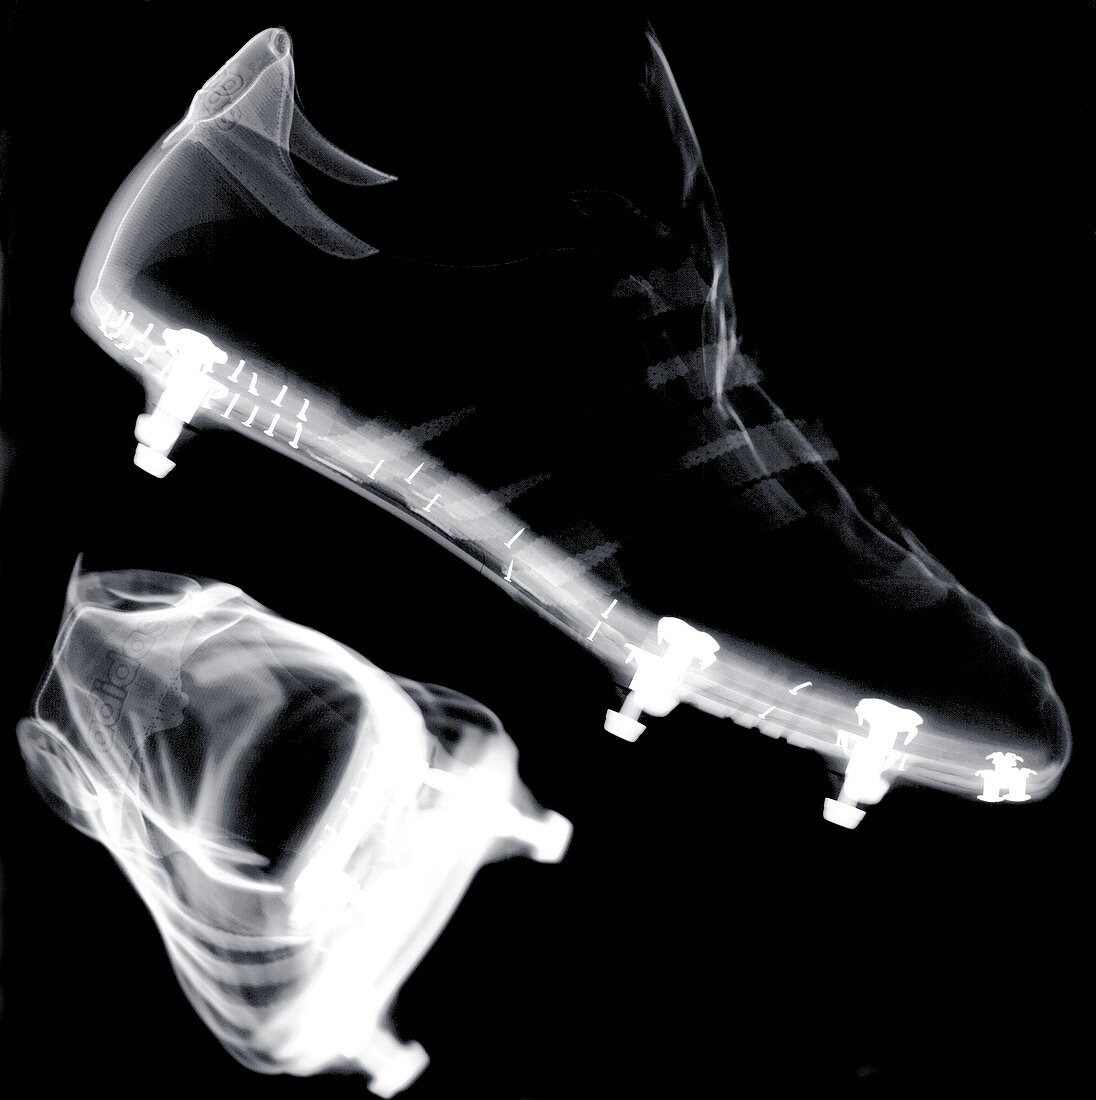 Football boots, X-ray